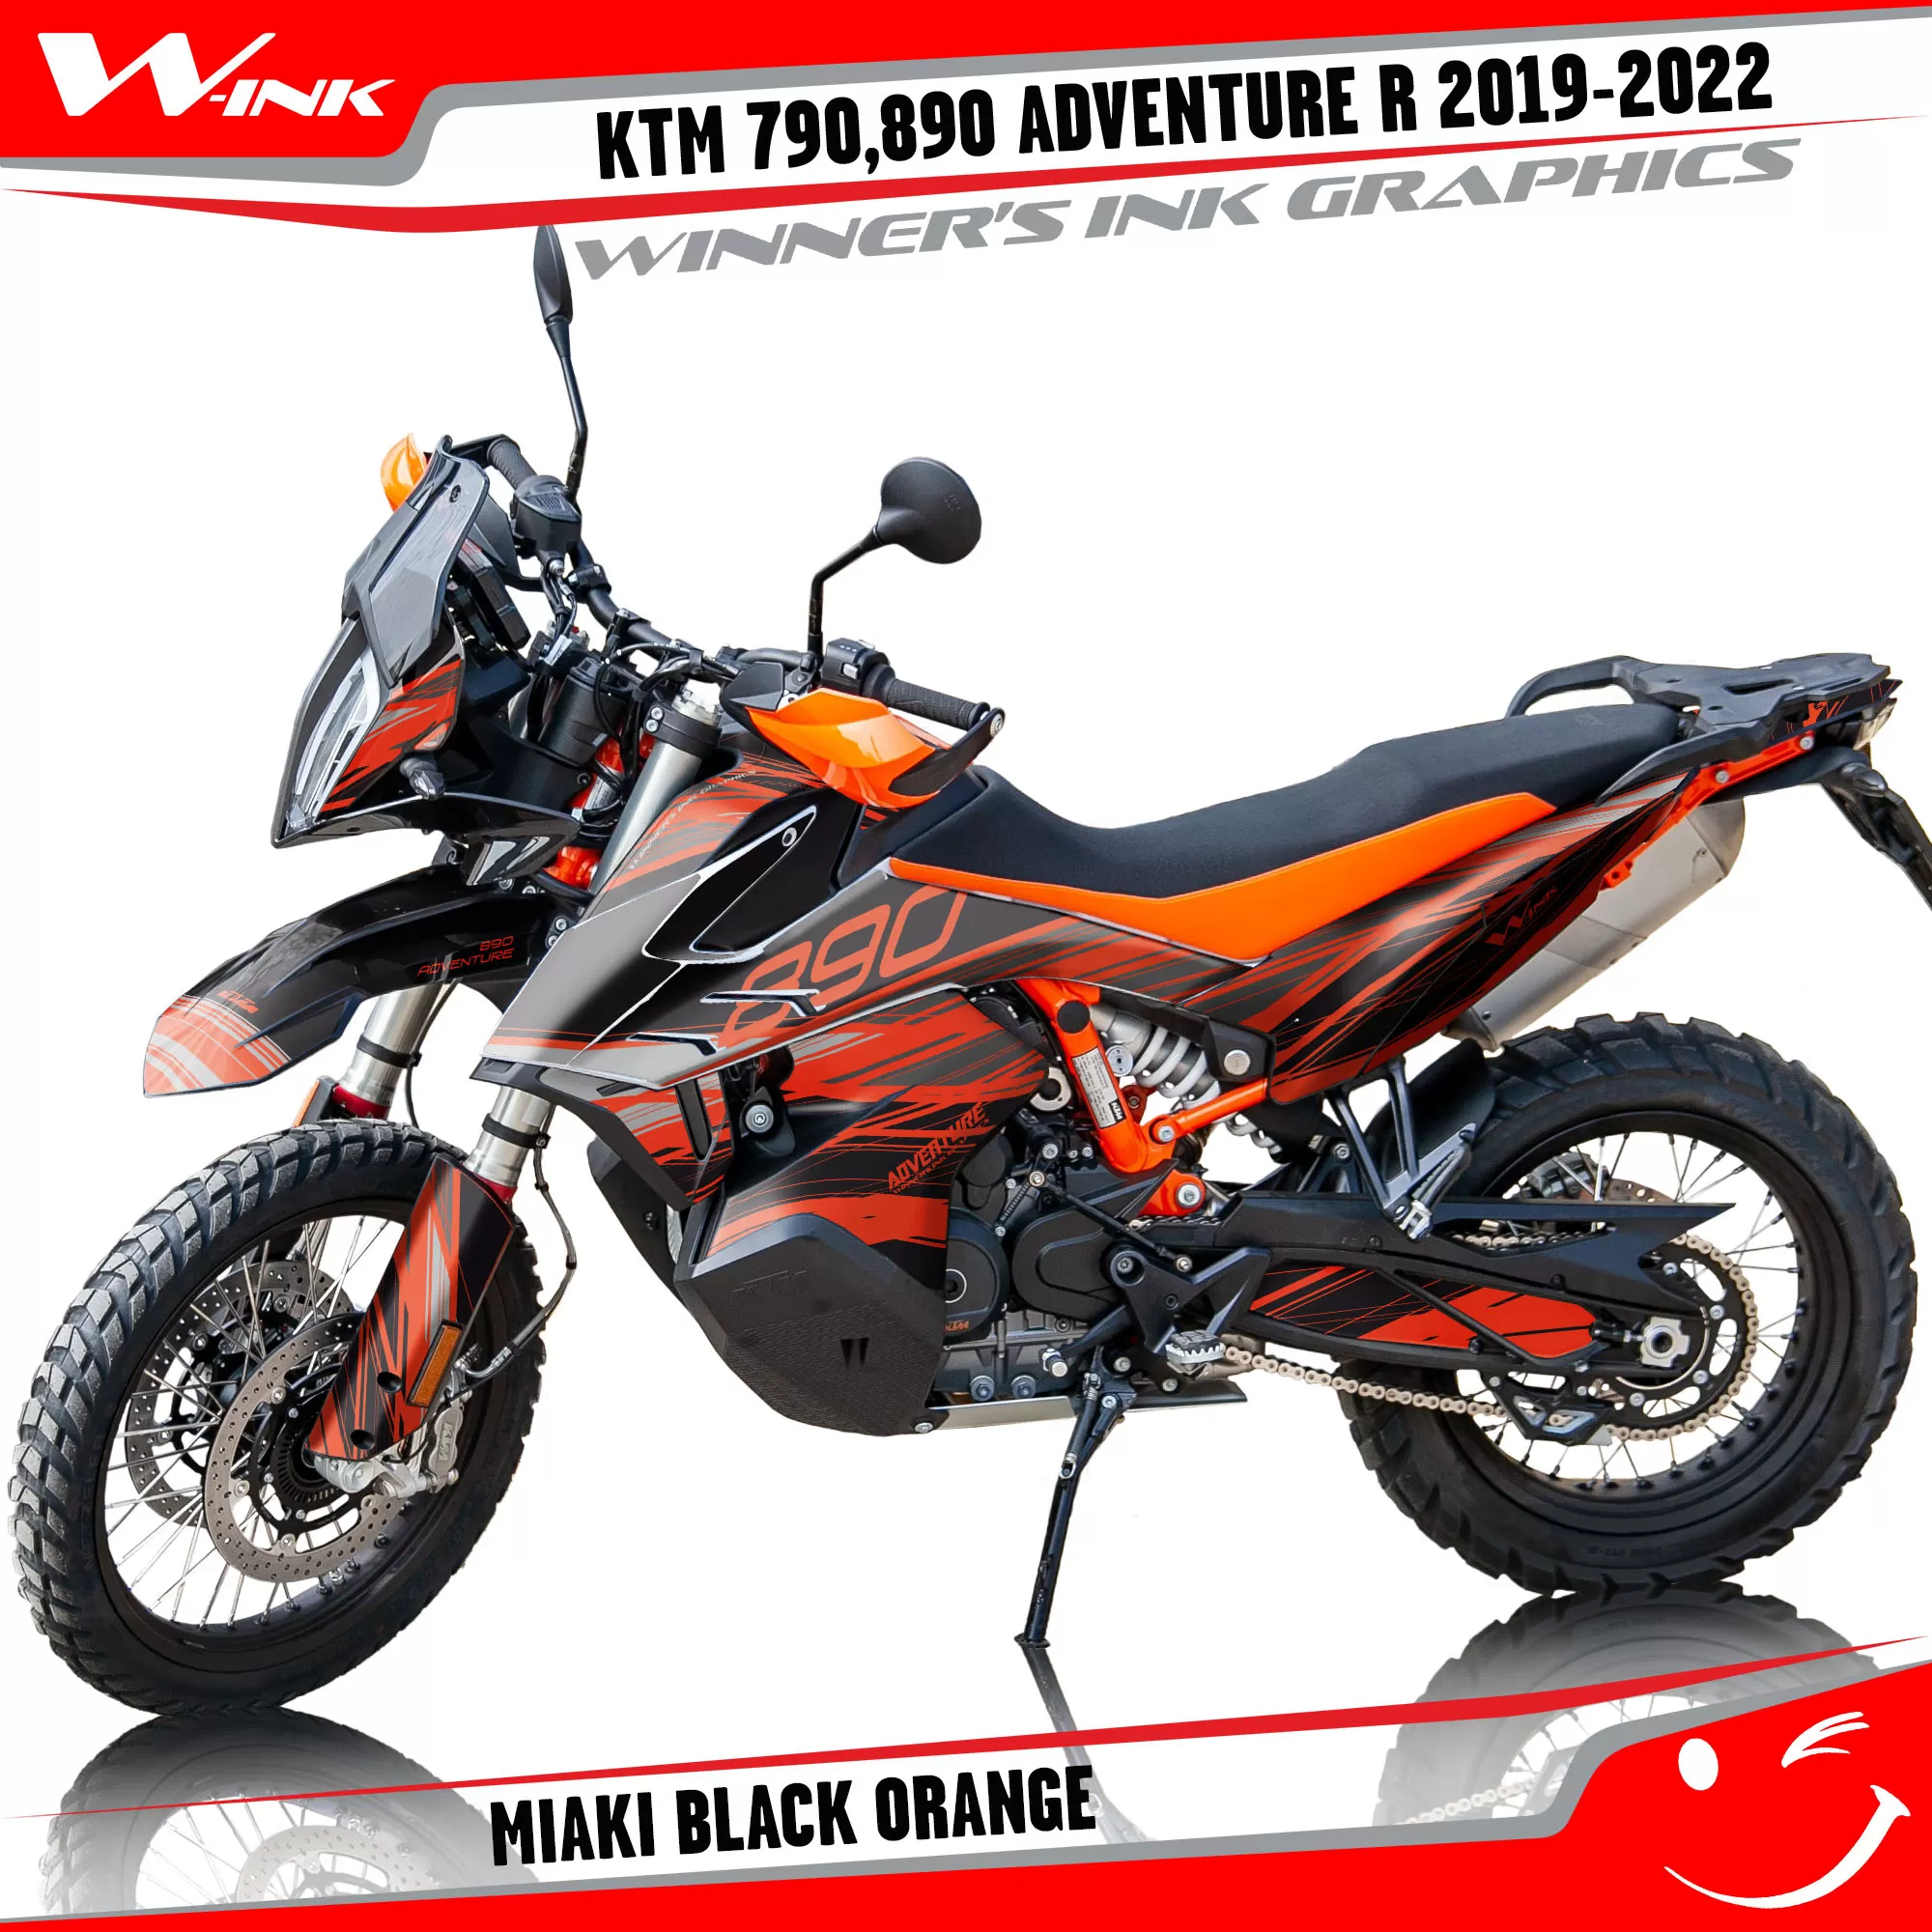 Adventure-R-790-890-2019-2020-2021-2022-graphics-kit-and-decals-with-designs-Miaki-Black-Orange